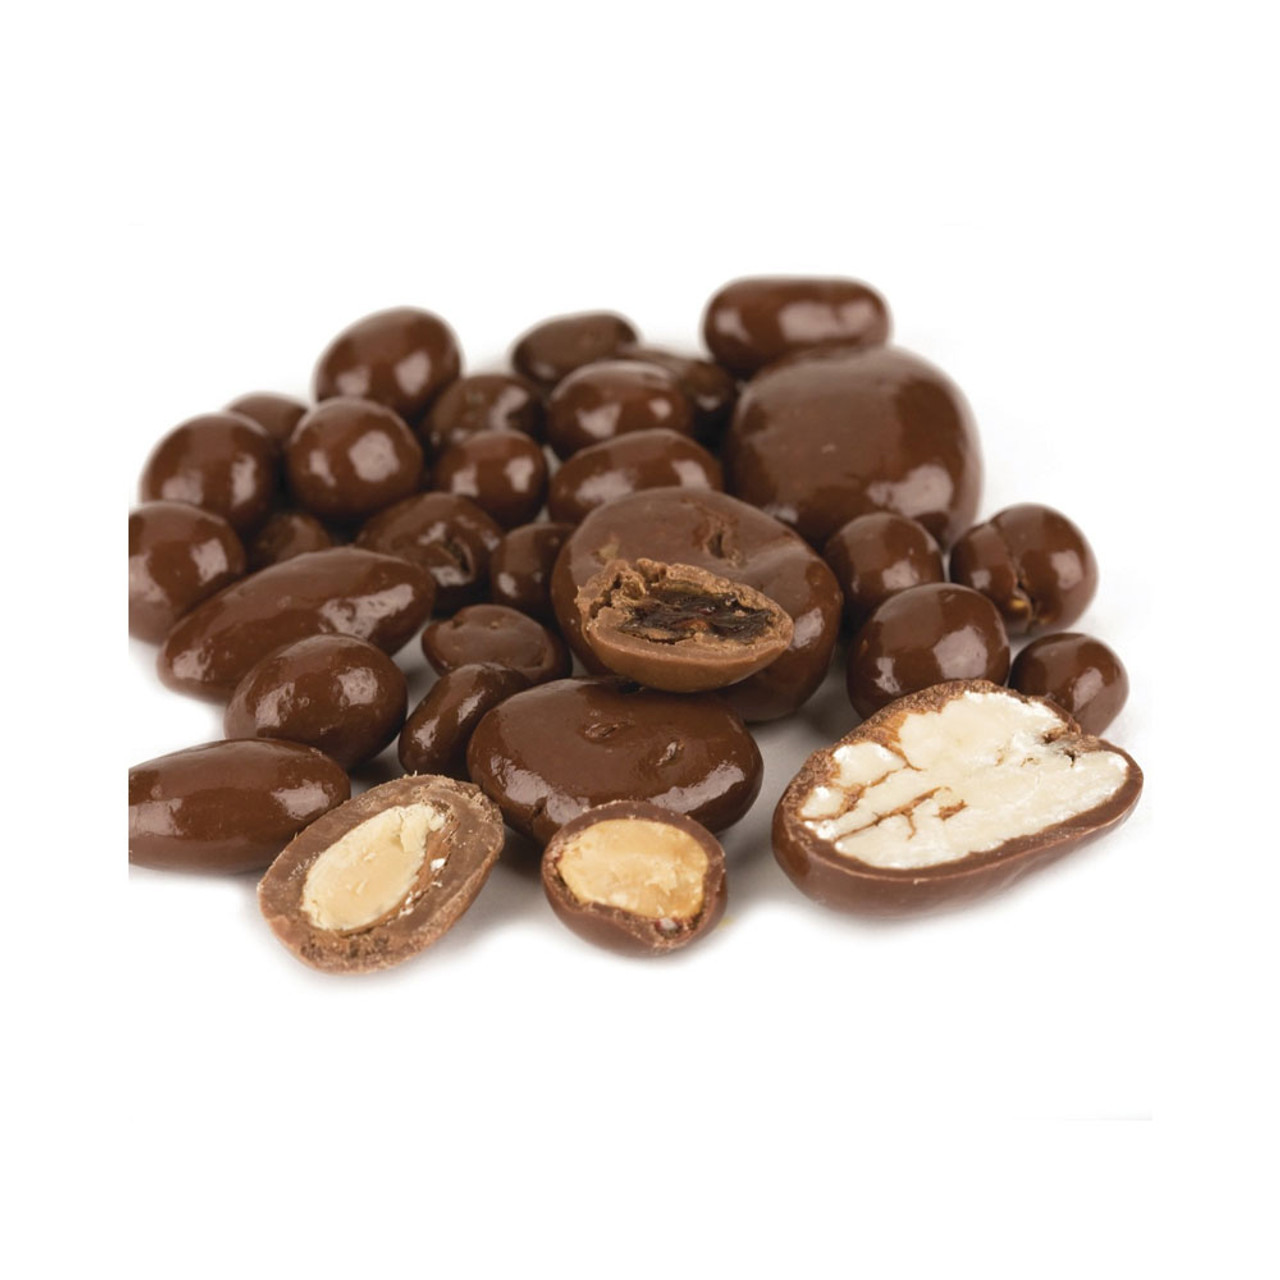 Assorted Chocolate Candy Variety Pack - 10 lb - Bulk Candy Chocolate Mix - Chocolate Candy Bulk - Assorted Hershey Chocolate - Bulk Individually